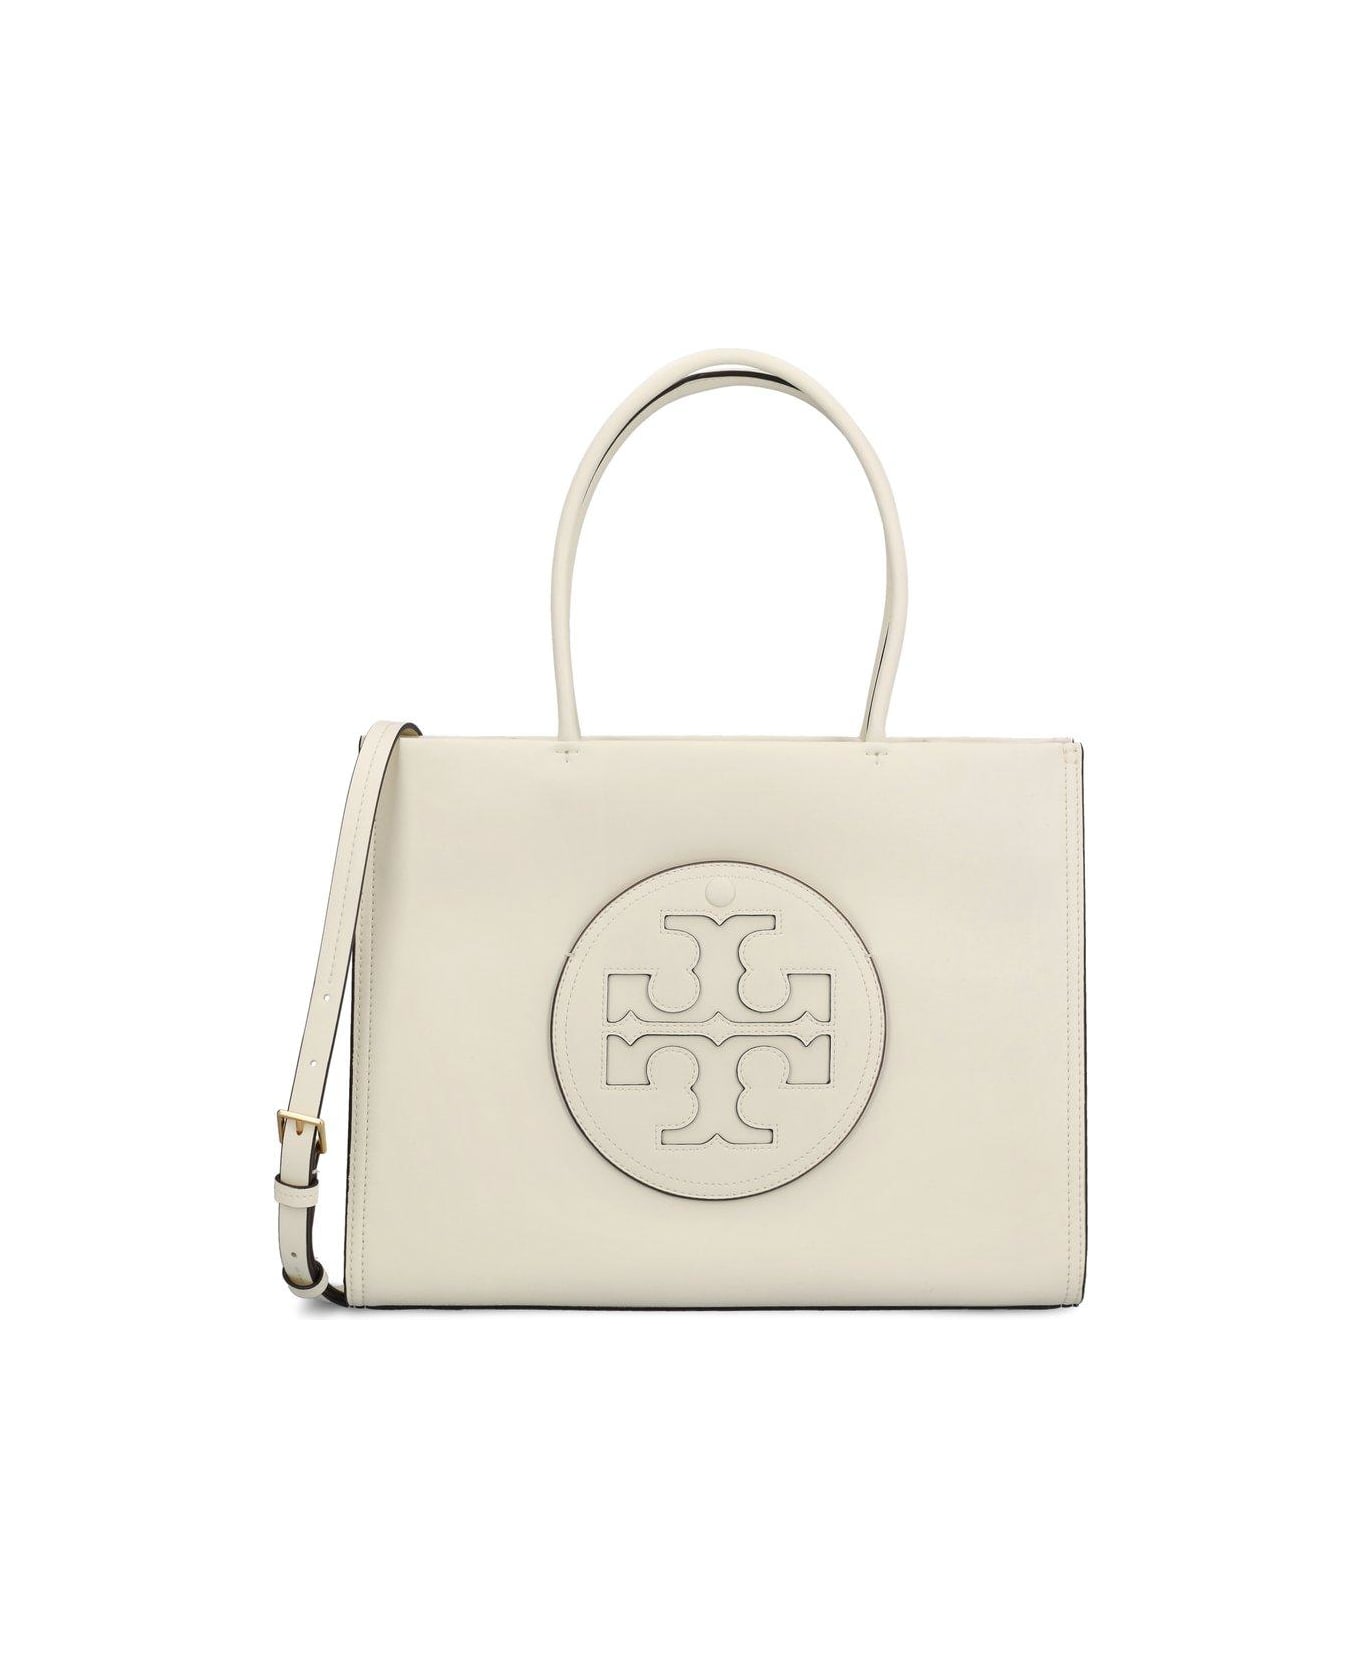 Tory Burch Ella Bio Top Handle Bag - WARM WHITE